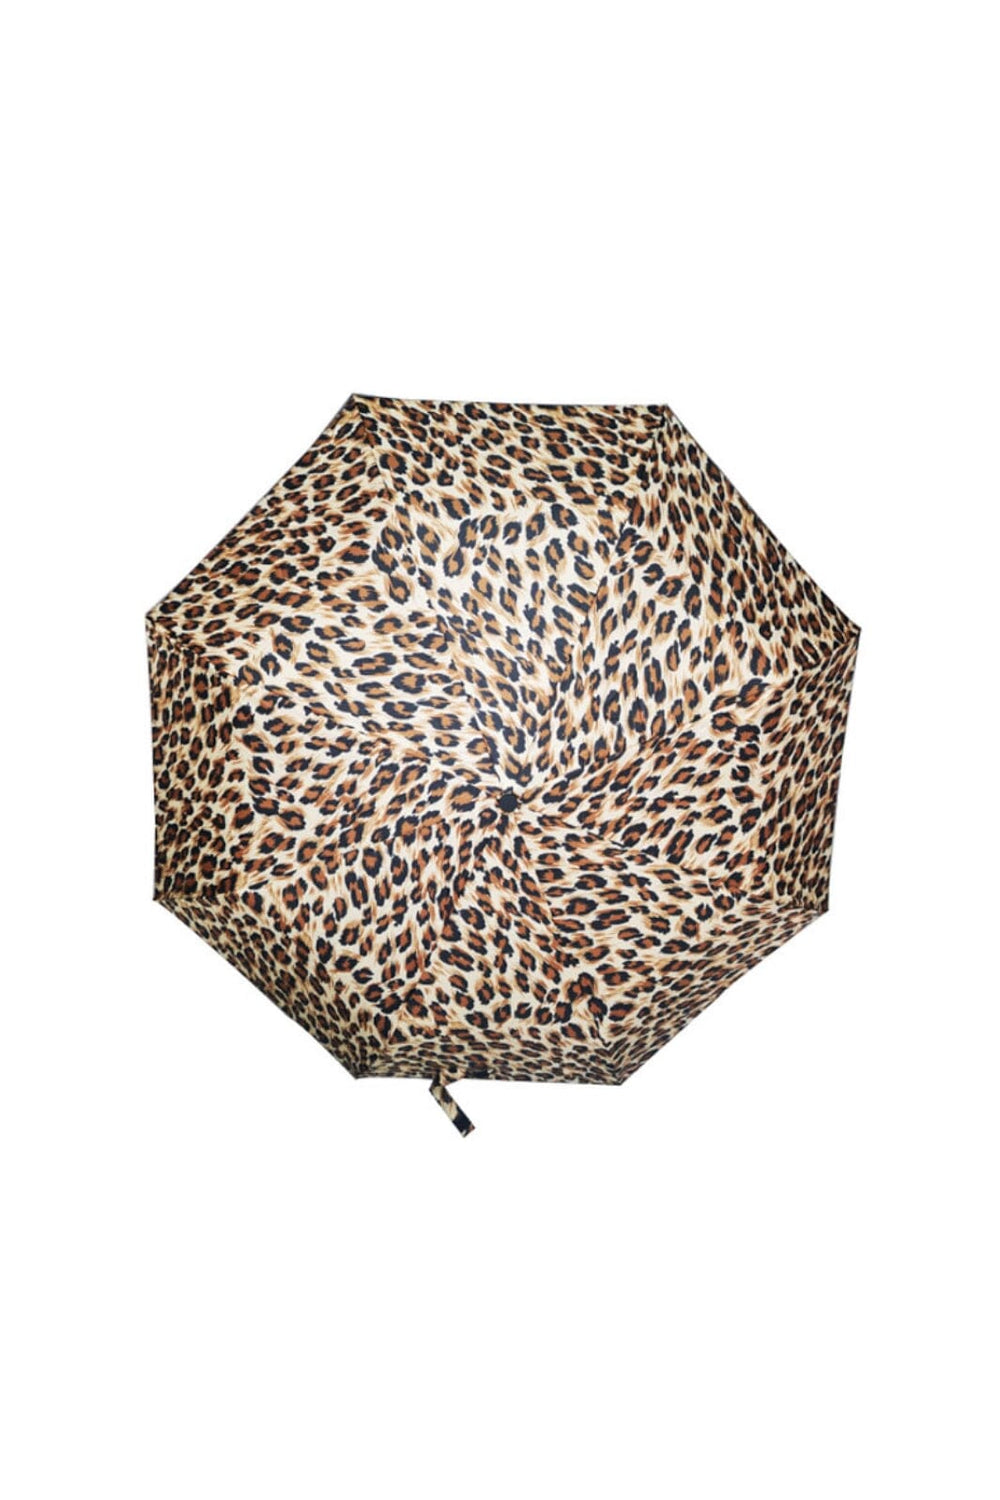 A-bee - PP-7922 Foldable Umbrella - Dark Brown Tilbehør 